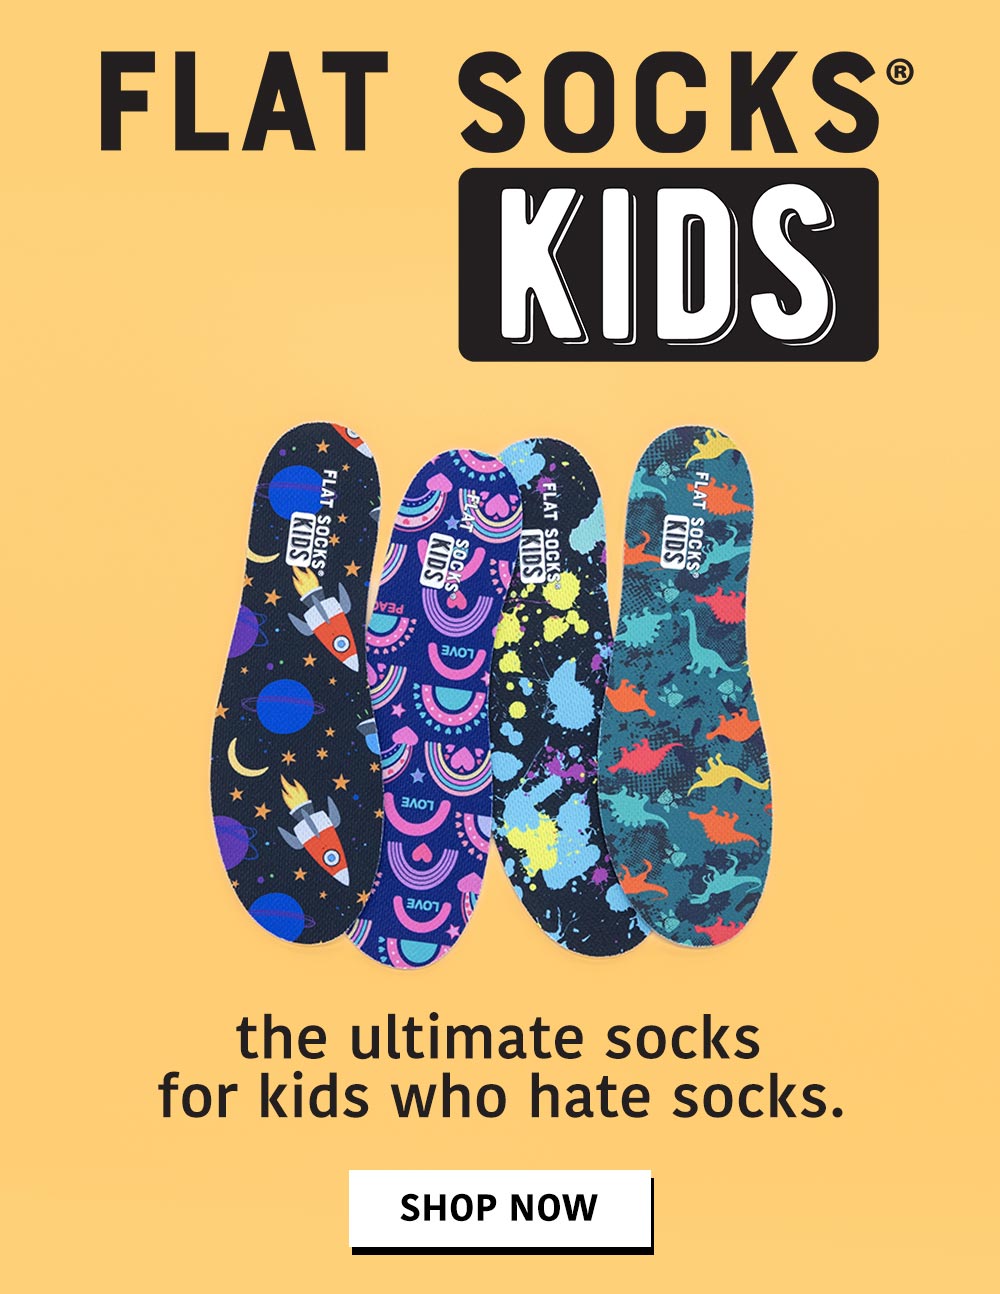 FLAT SOCKS Kids, the ultimate socks for kids who hate socks. Shop now.